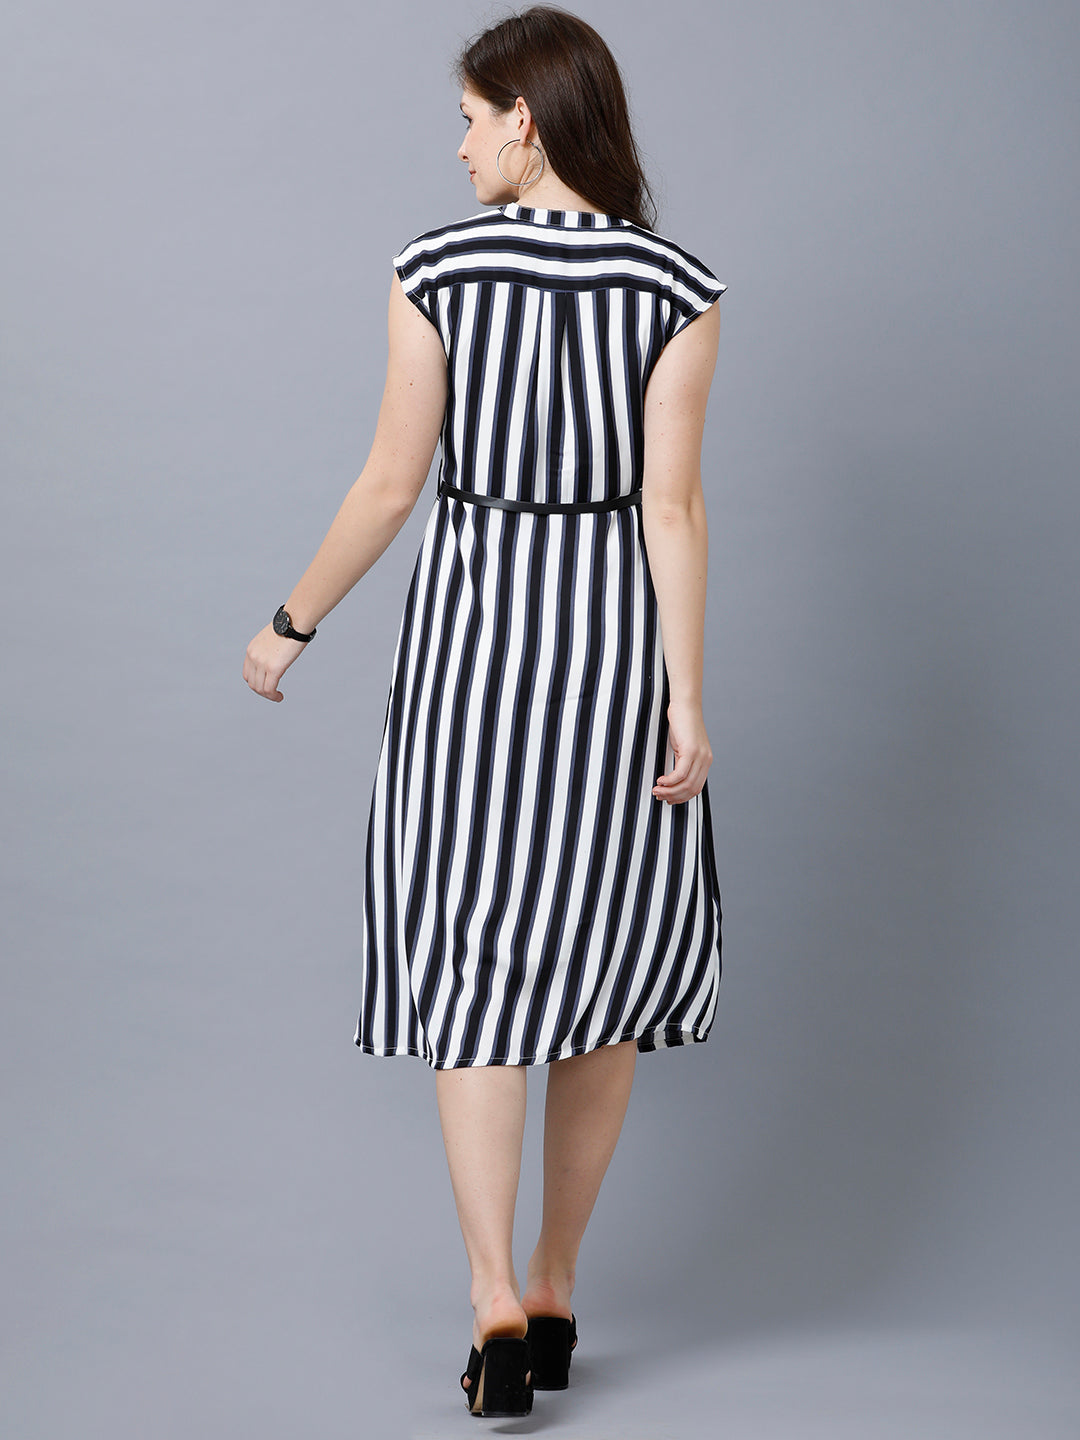 Identiti Stripe A-Line dress